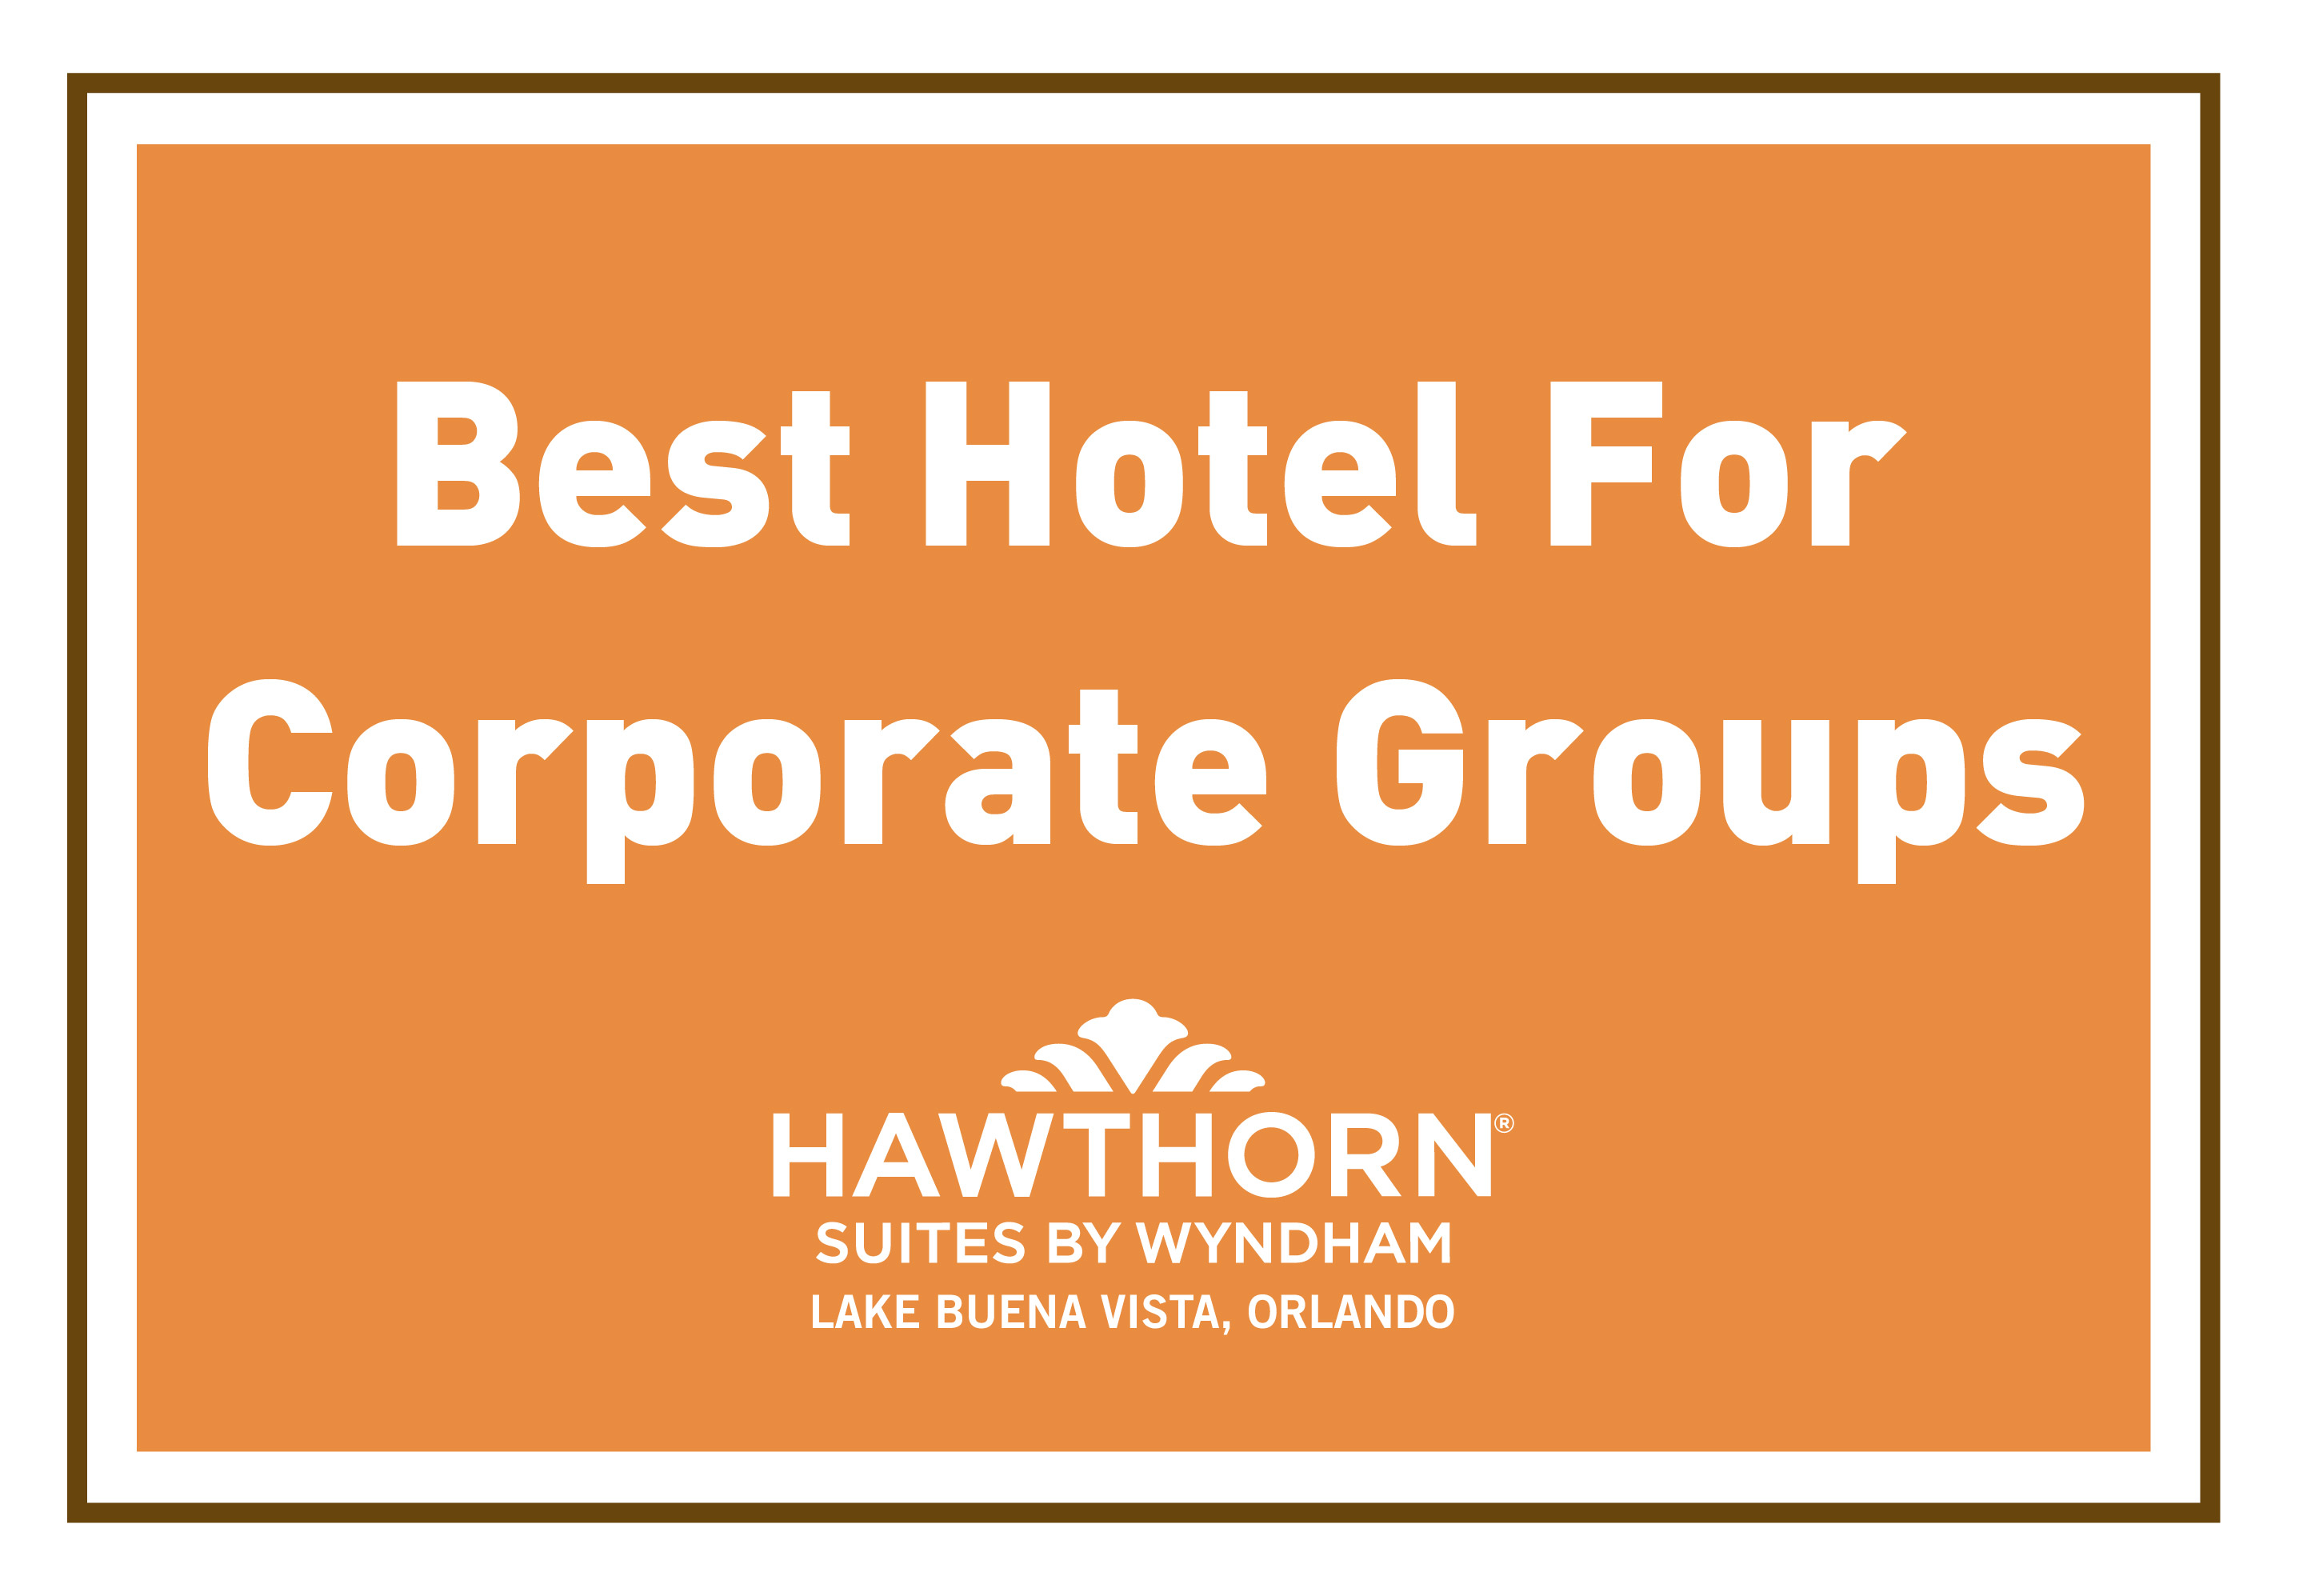 Best Hotel For Corporate Groups- Hawthorn LBV - Hawthorn Suites By Wyndham Lake Buena Vista, Orlando